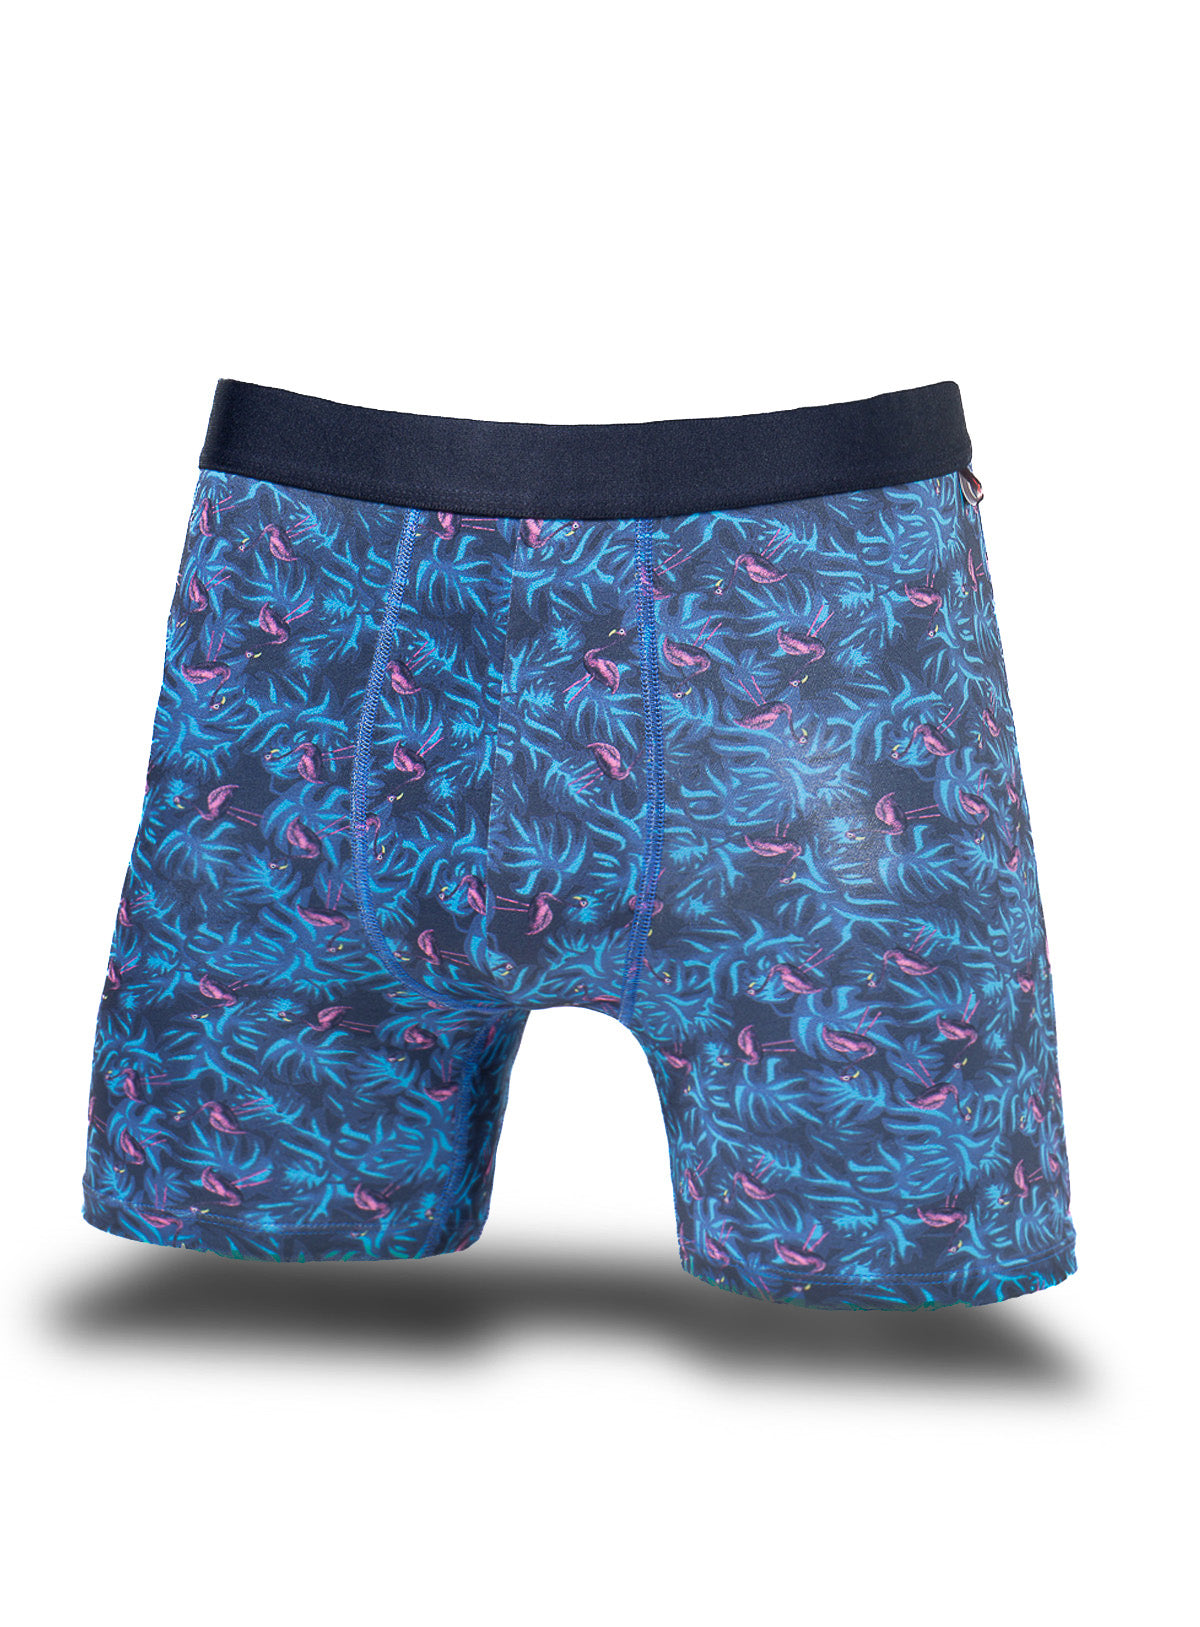 Flamingo Print Boxer Underwear for men - Anthony of London